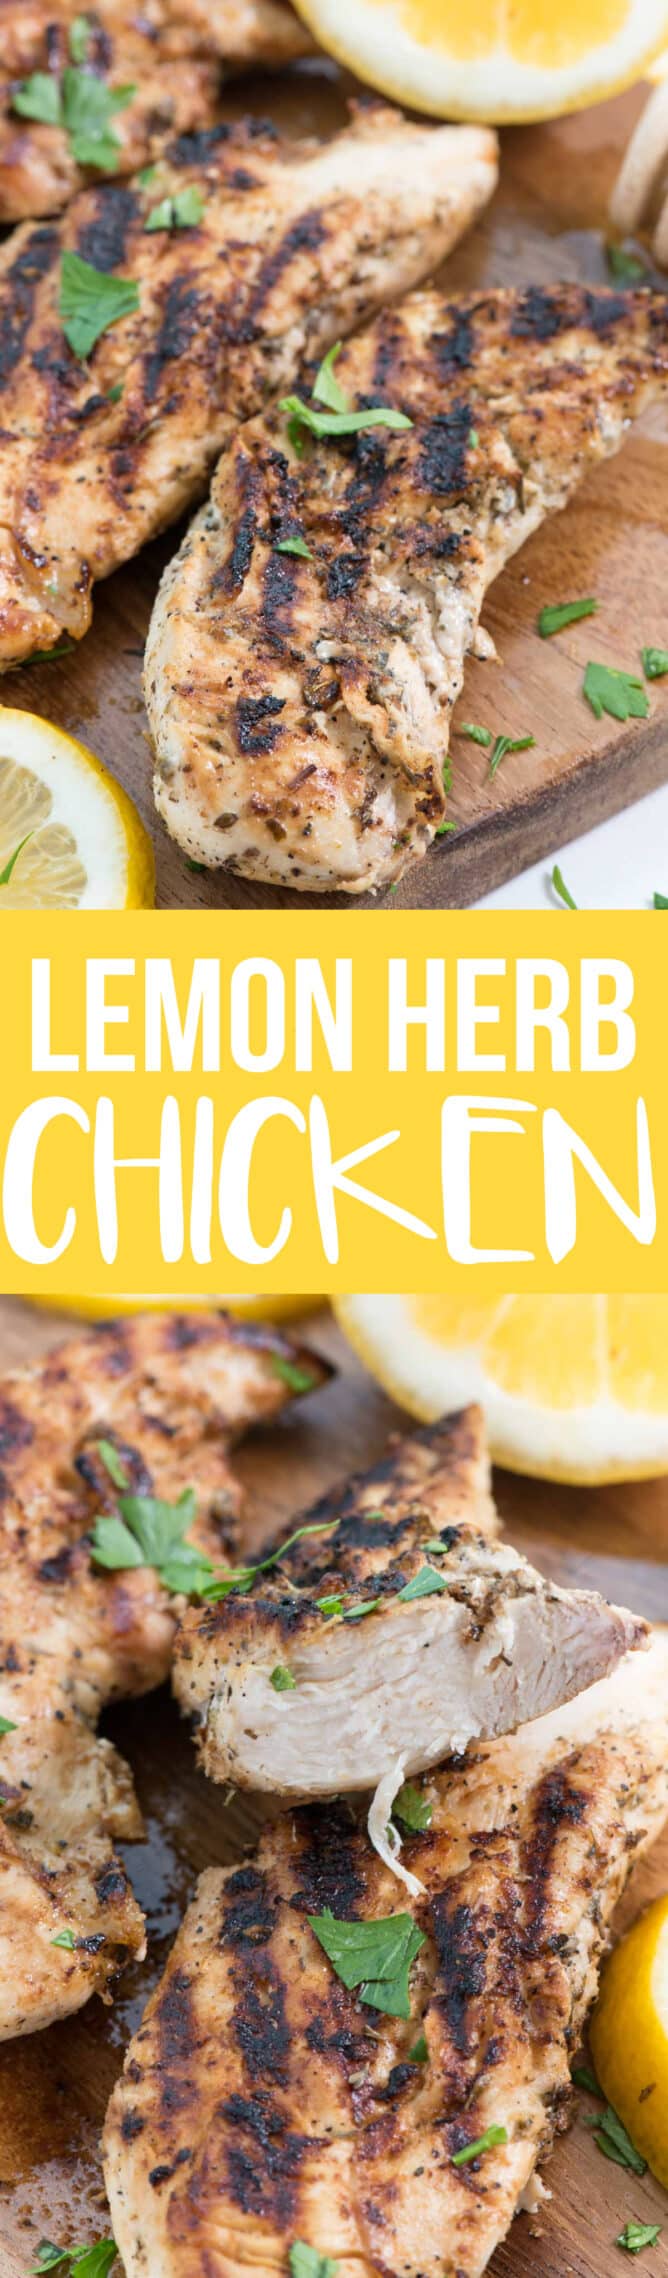 Collage of lemon herb chicken